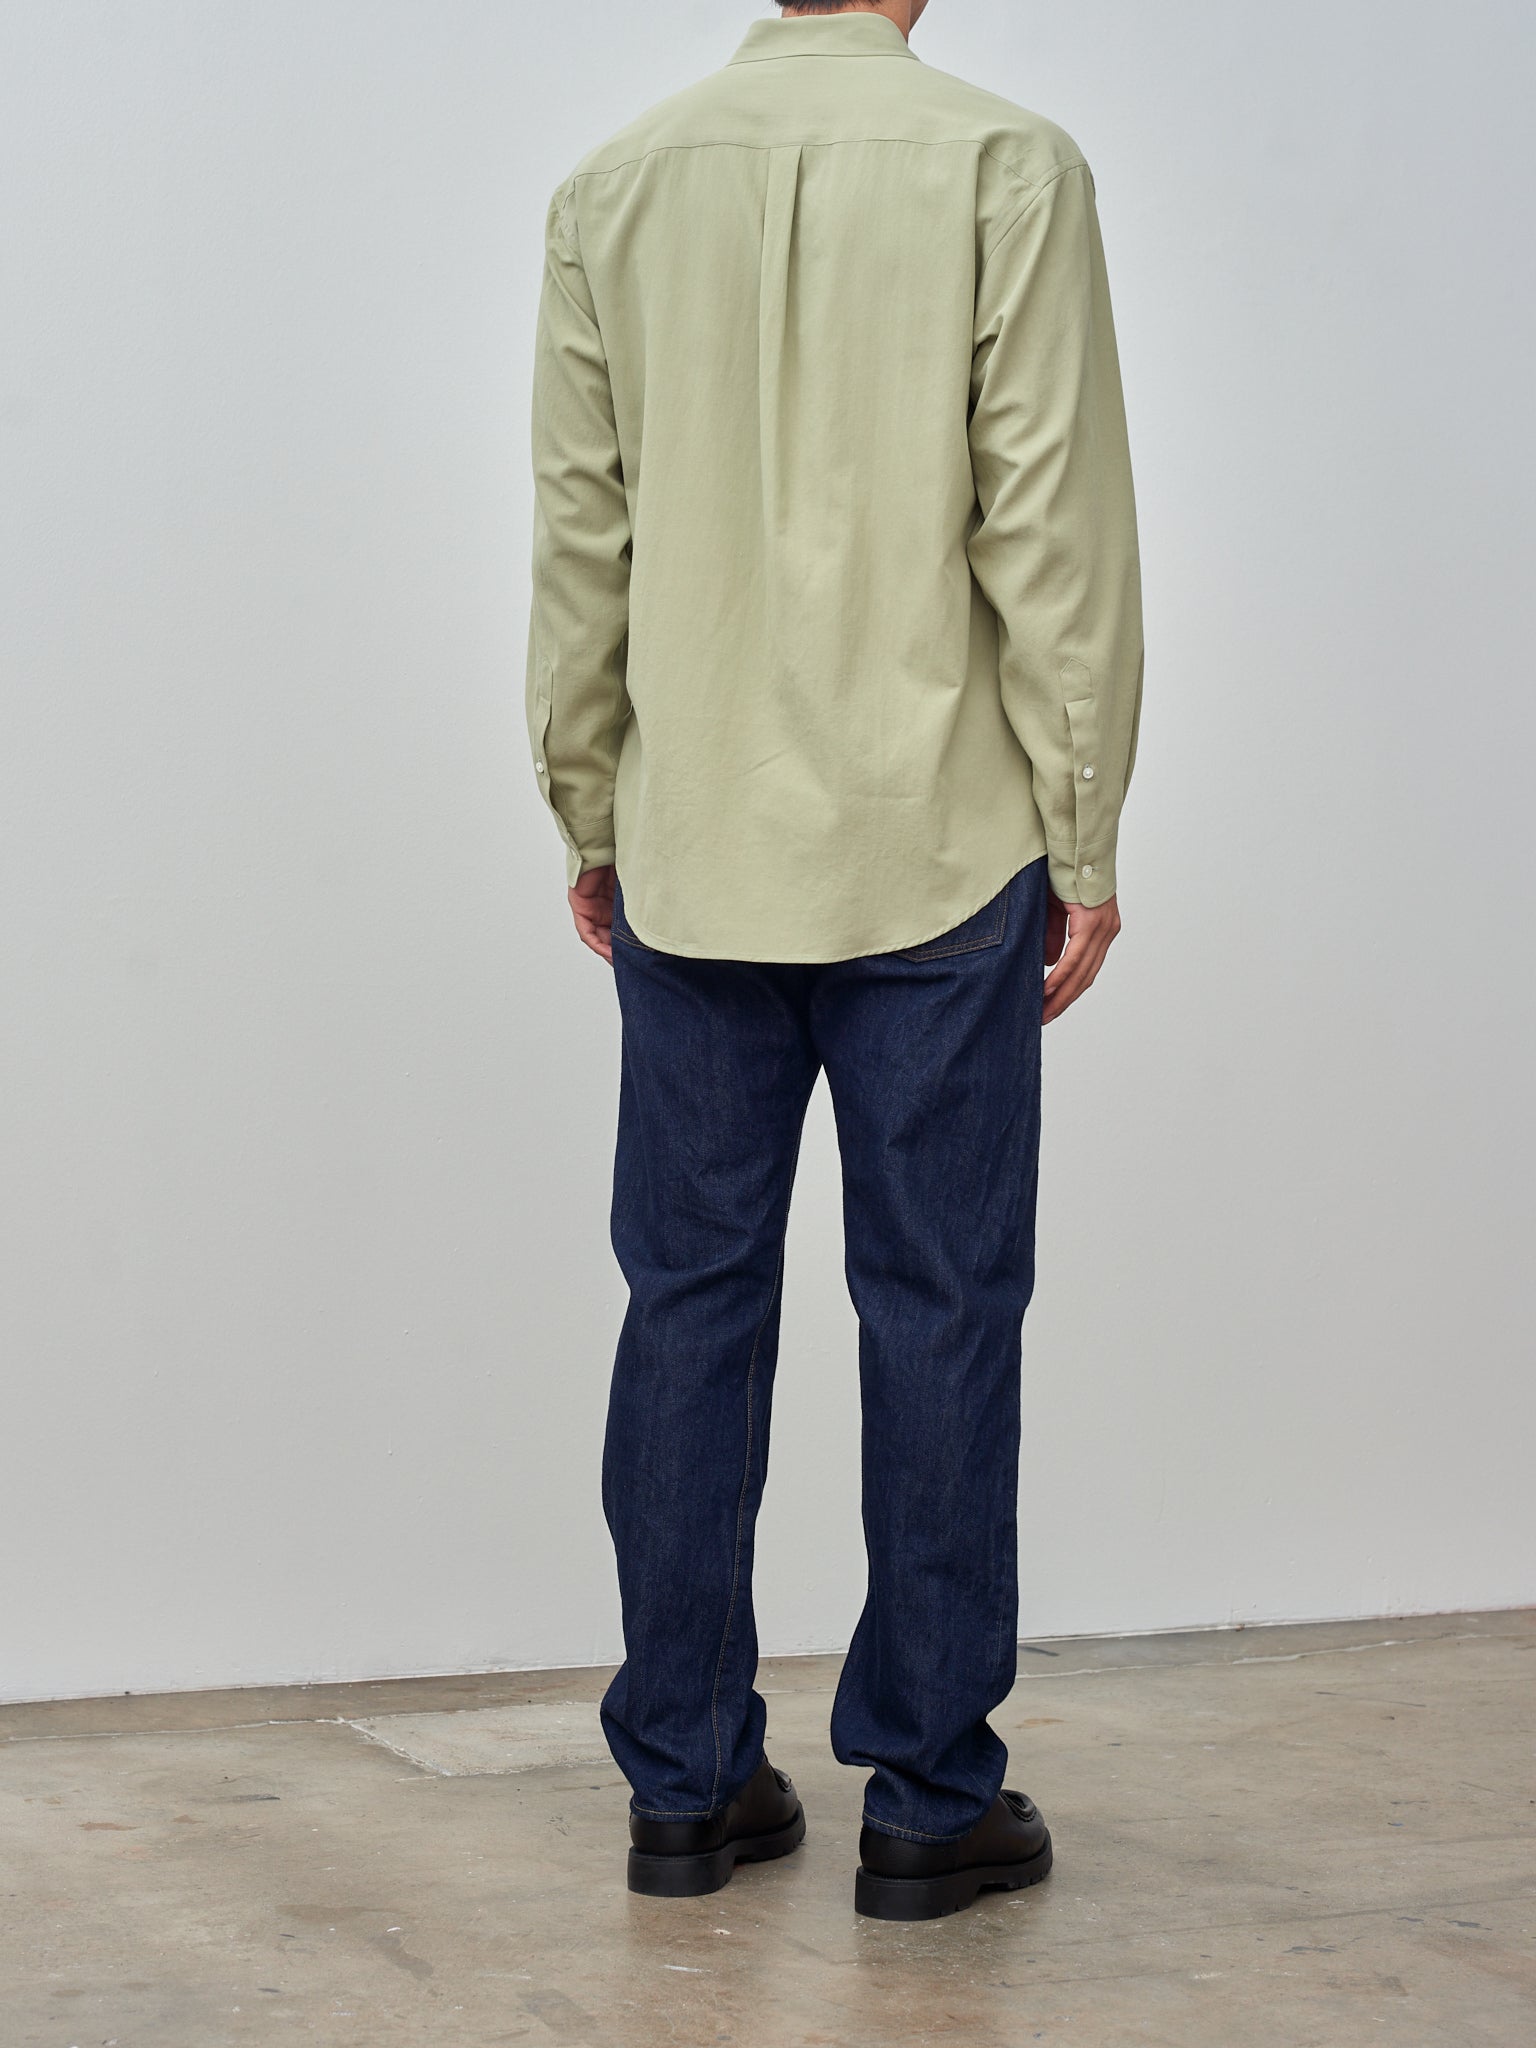 Namu Shop - Auralee Hard Twist Cotton Silk Viyella Shirt - Sage Green